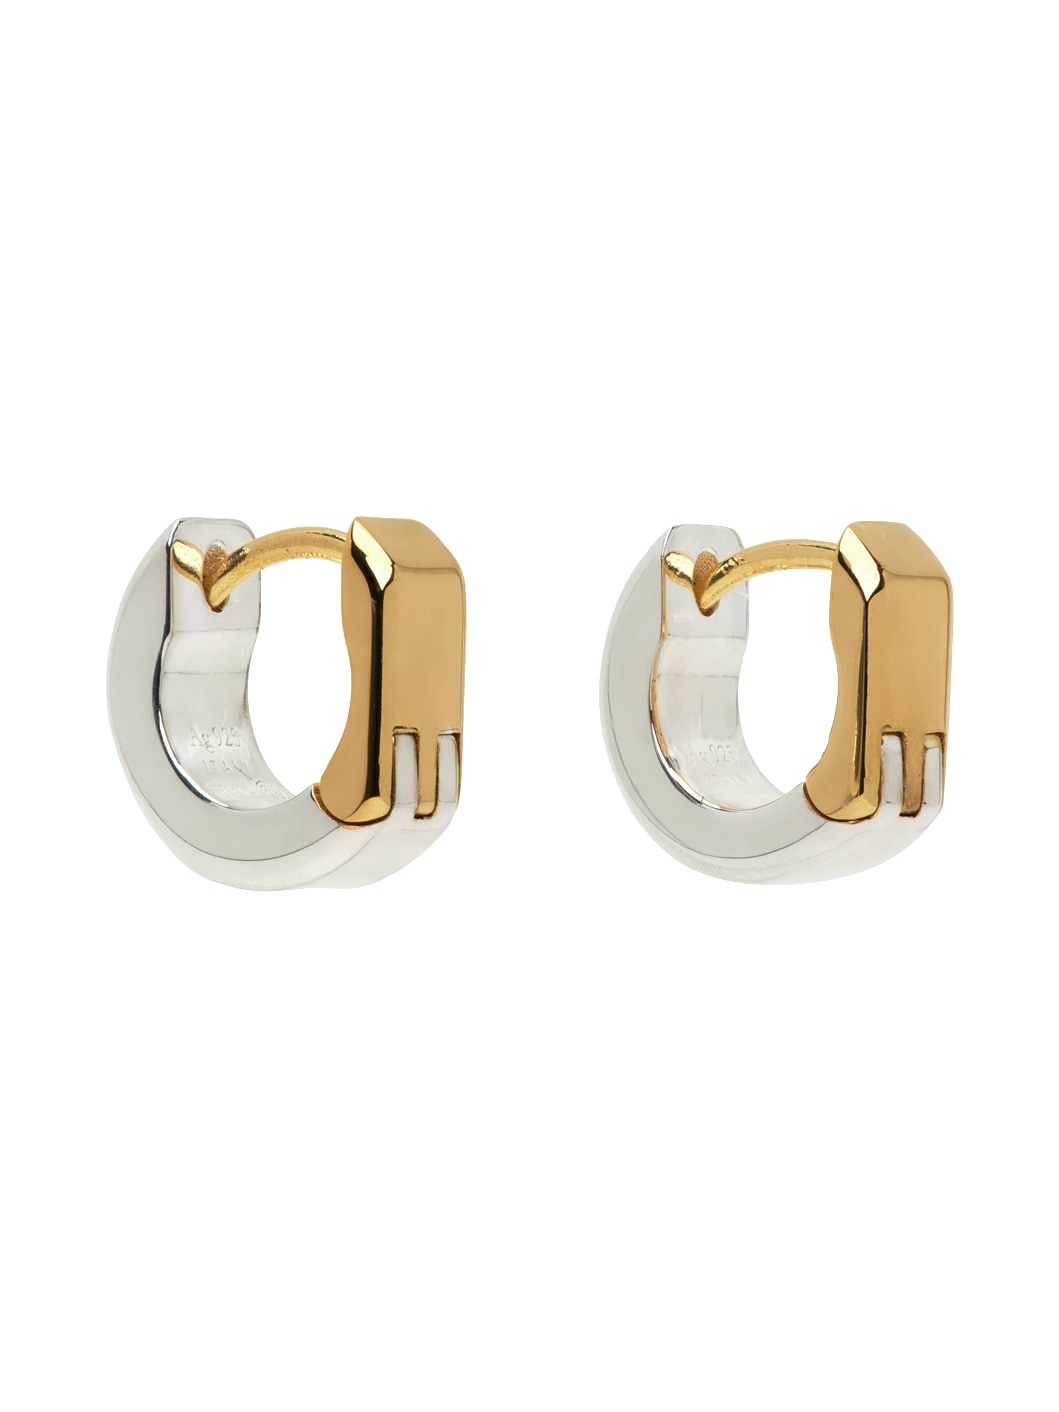 Gold & Silver Hinge Earrings - 2